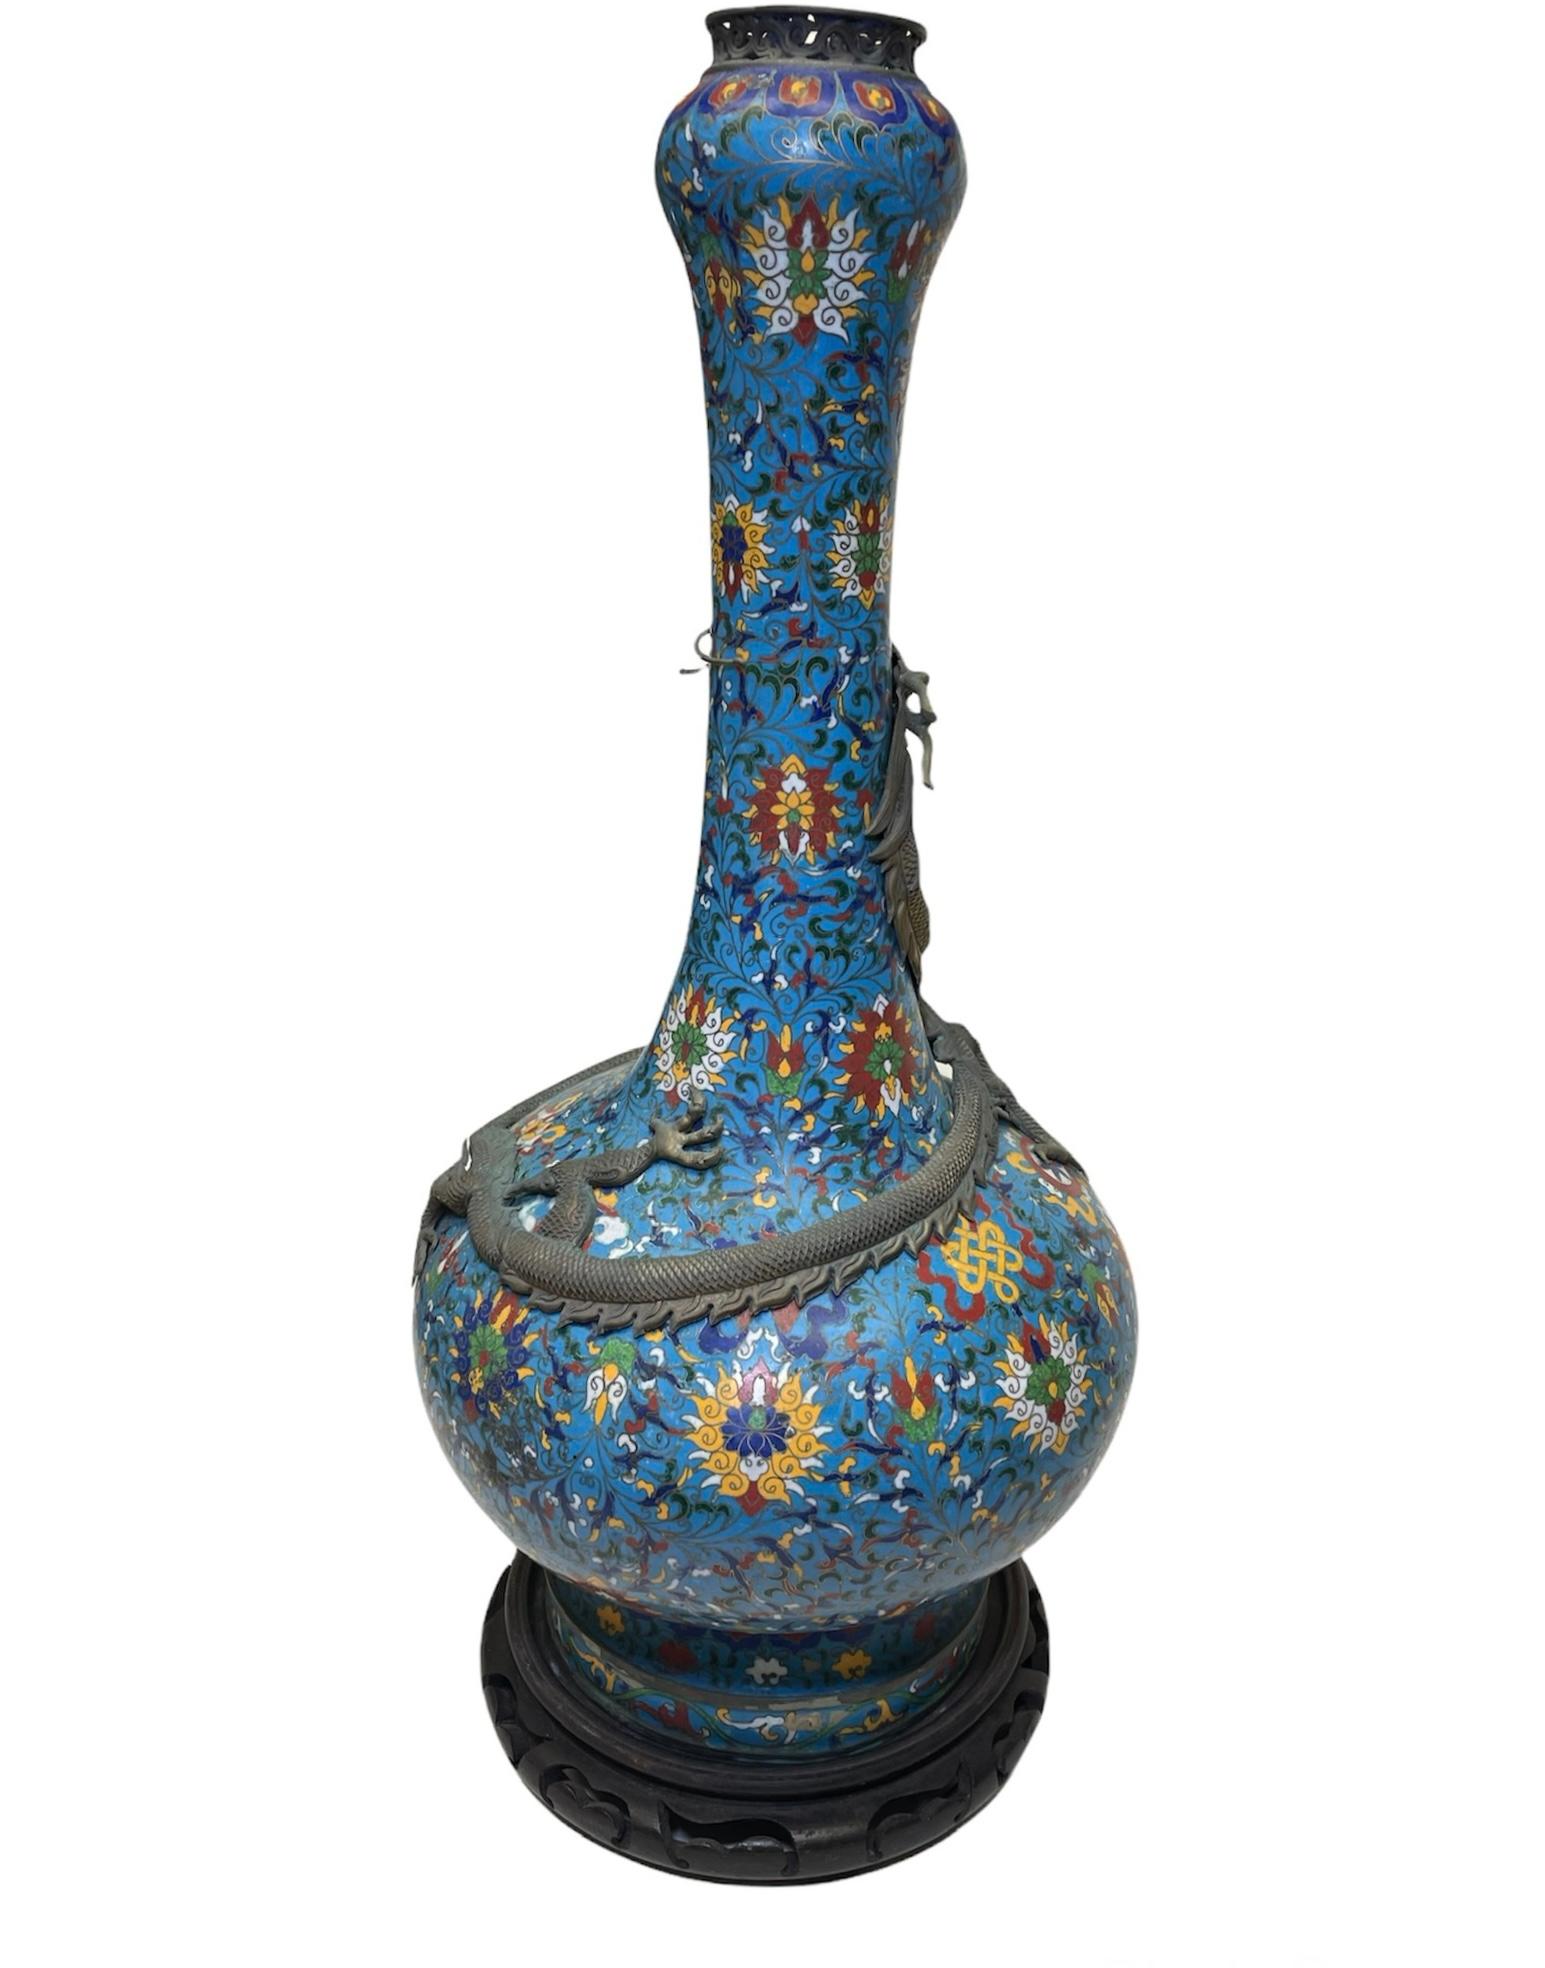 Cloissoné Rare Chinese Large and Long Cloisonné Urn Vase